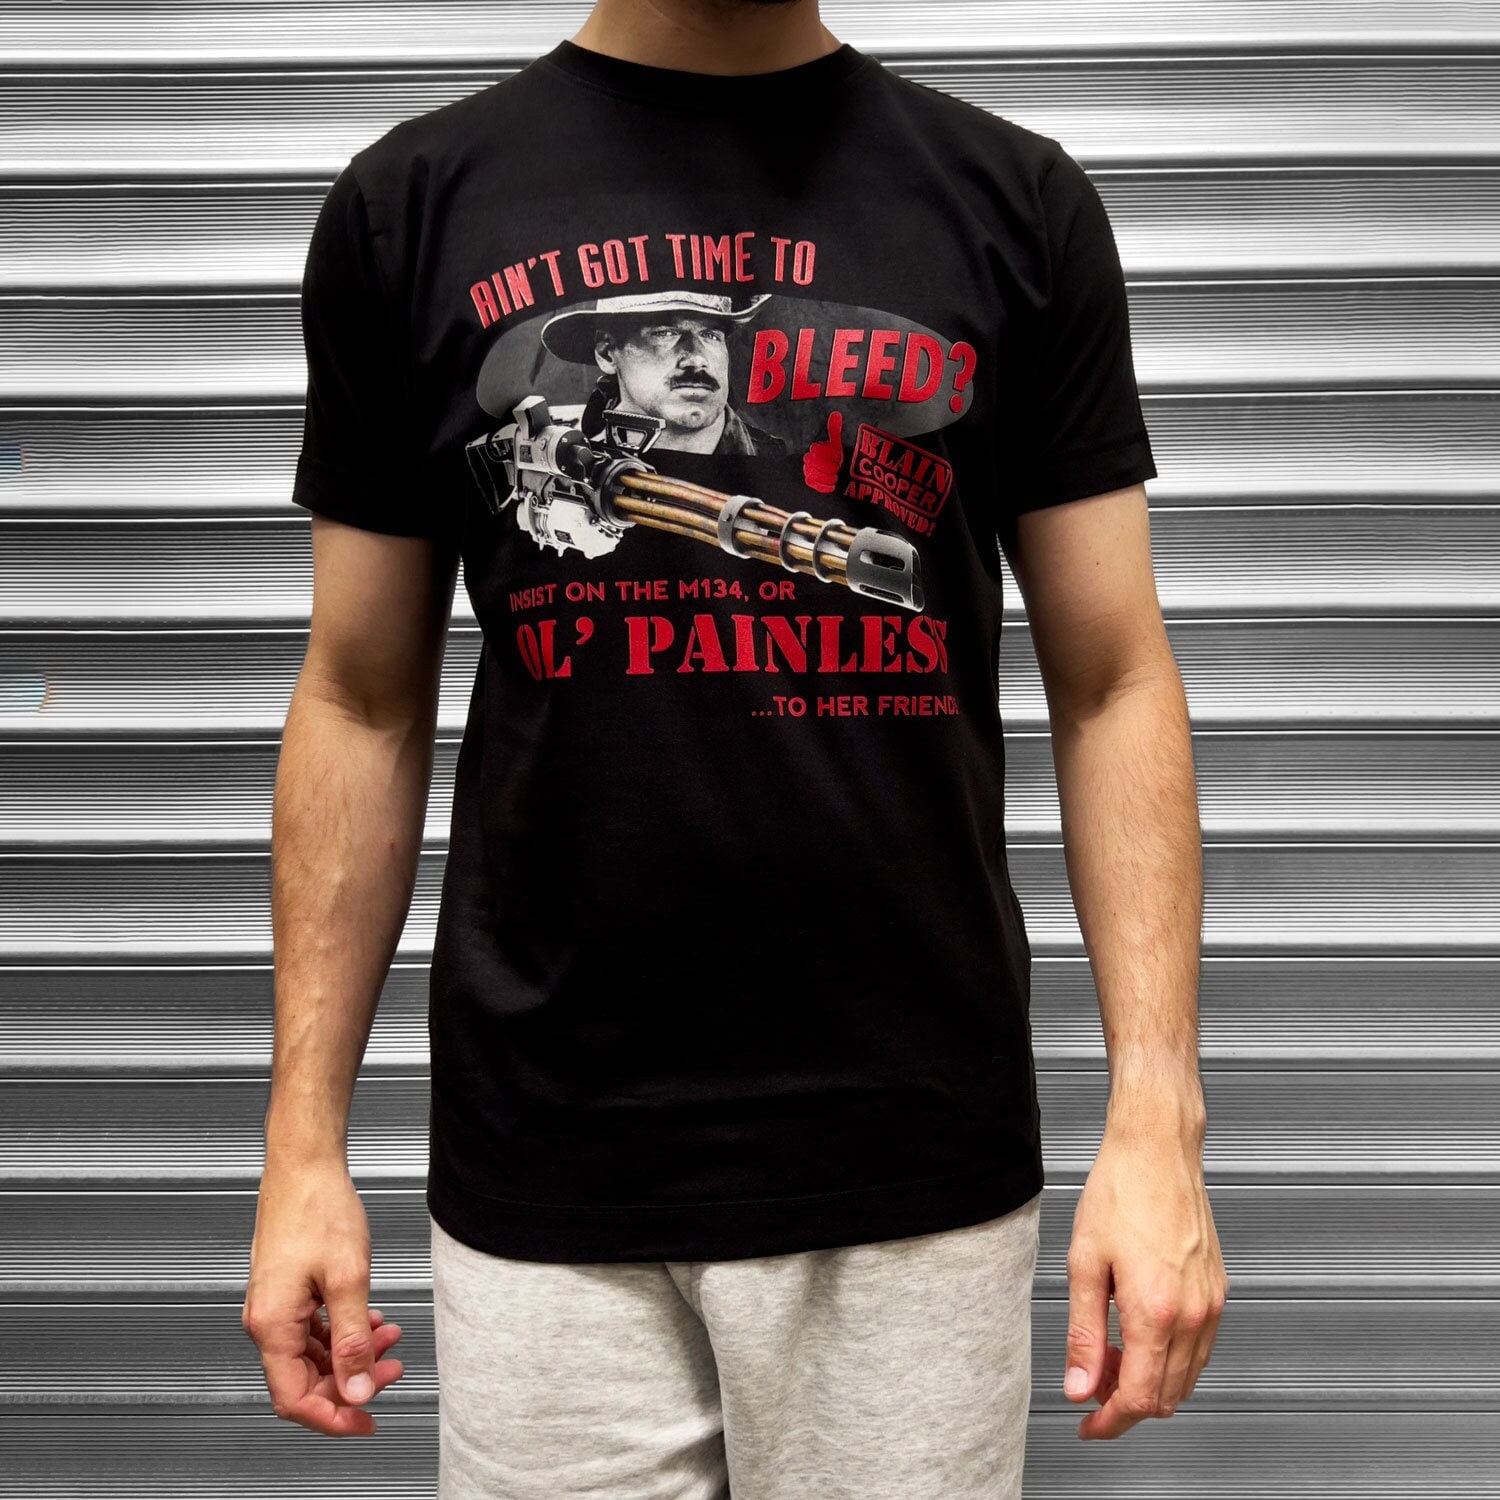 Predator Movie 80s Essential T-Shirt | Essential T-Shirt